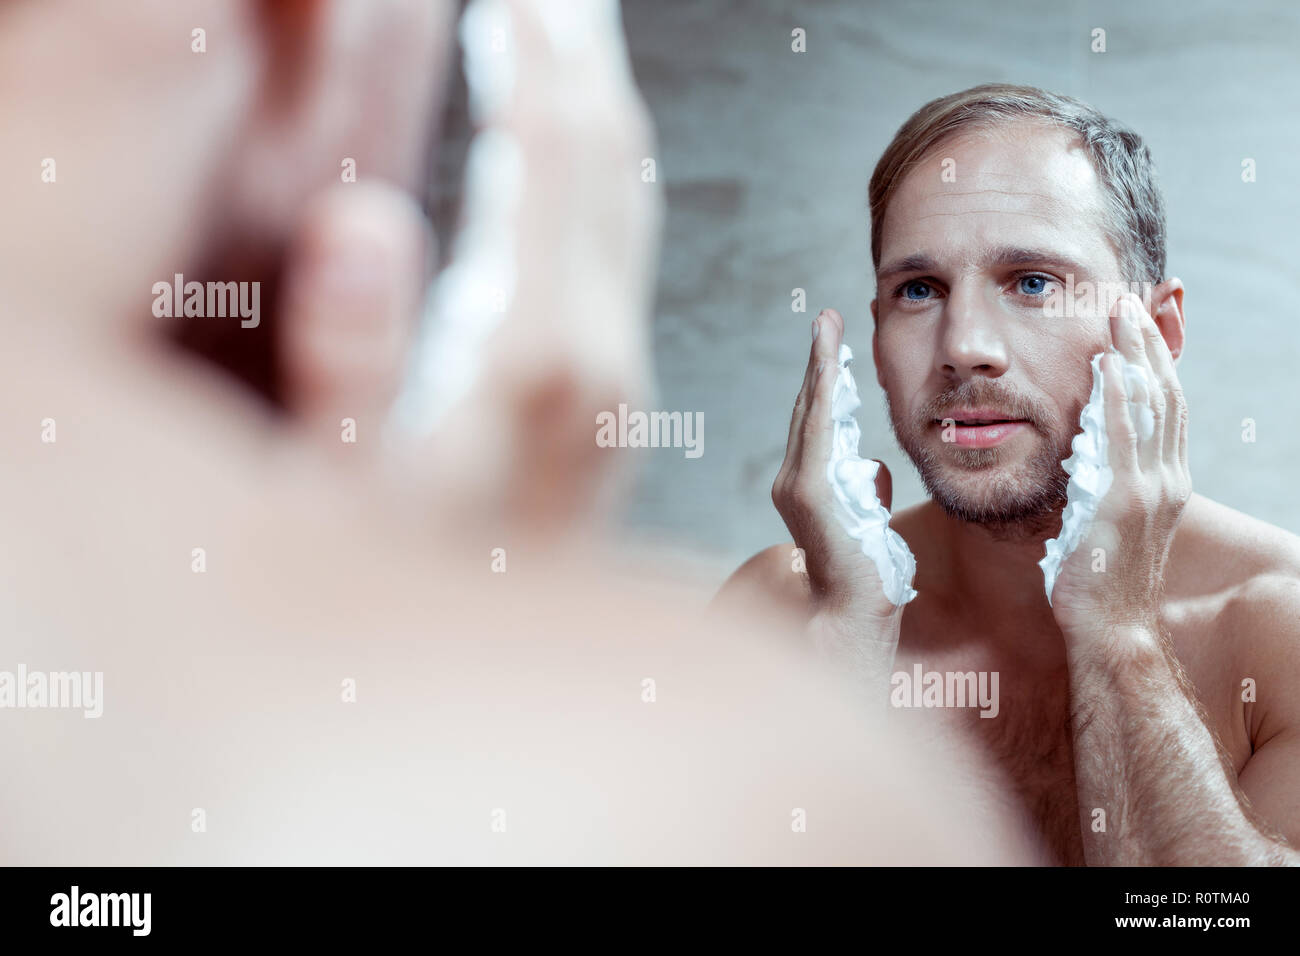 Handsome blue-eyed man using shaving foam while shaving face Stock Photo